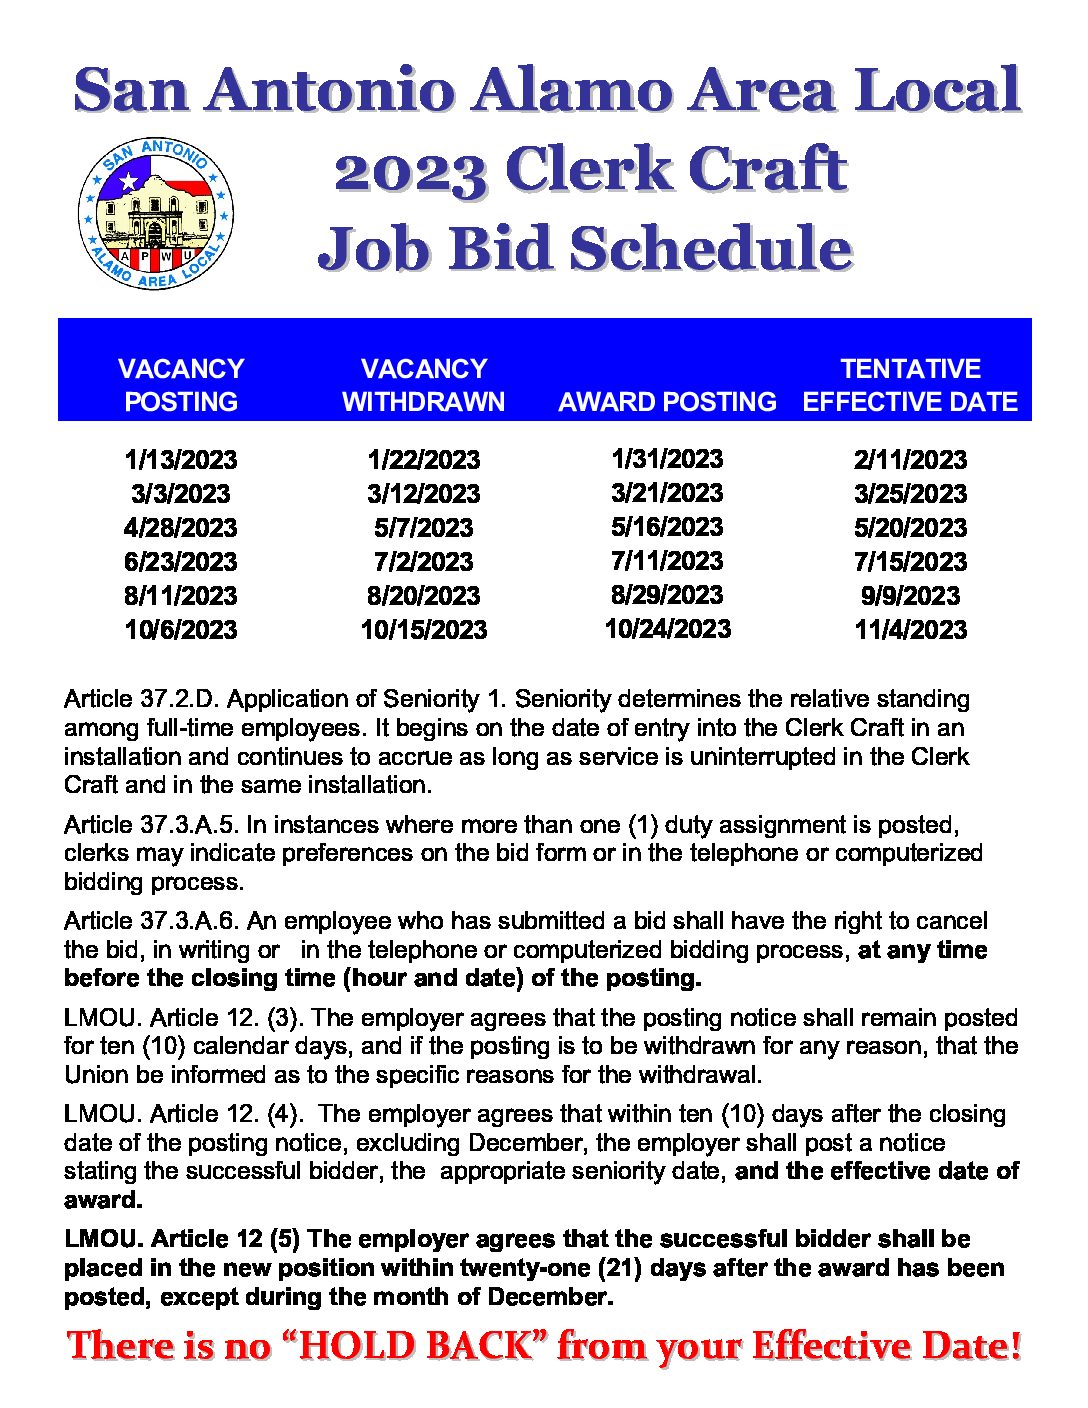 2023 Clerk Craft Job Bid Schedule - 